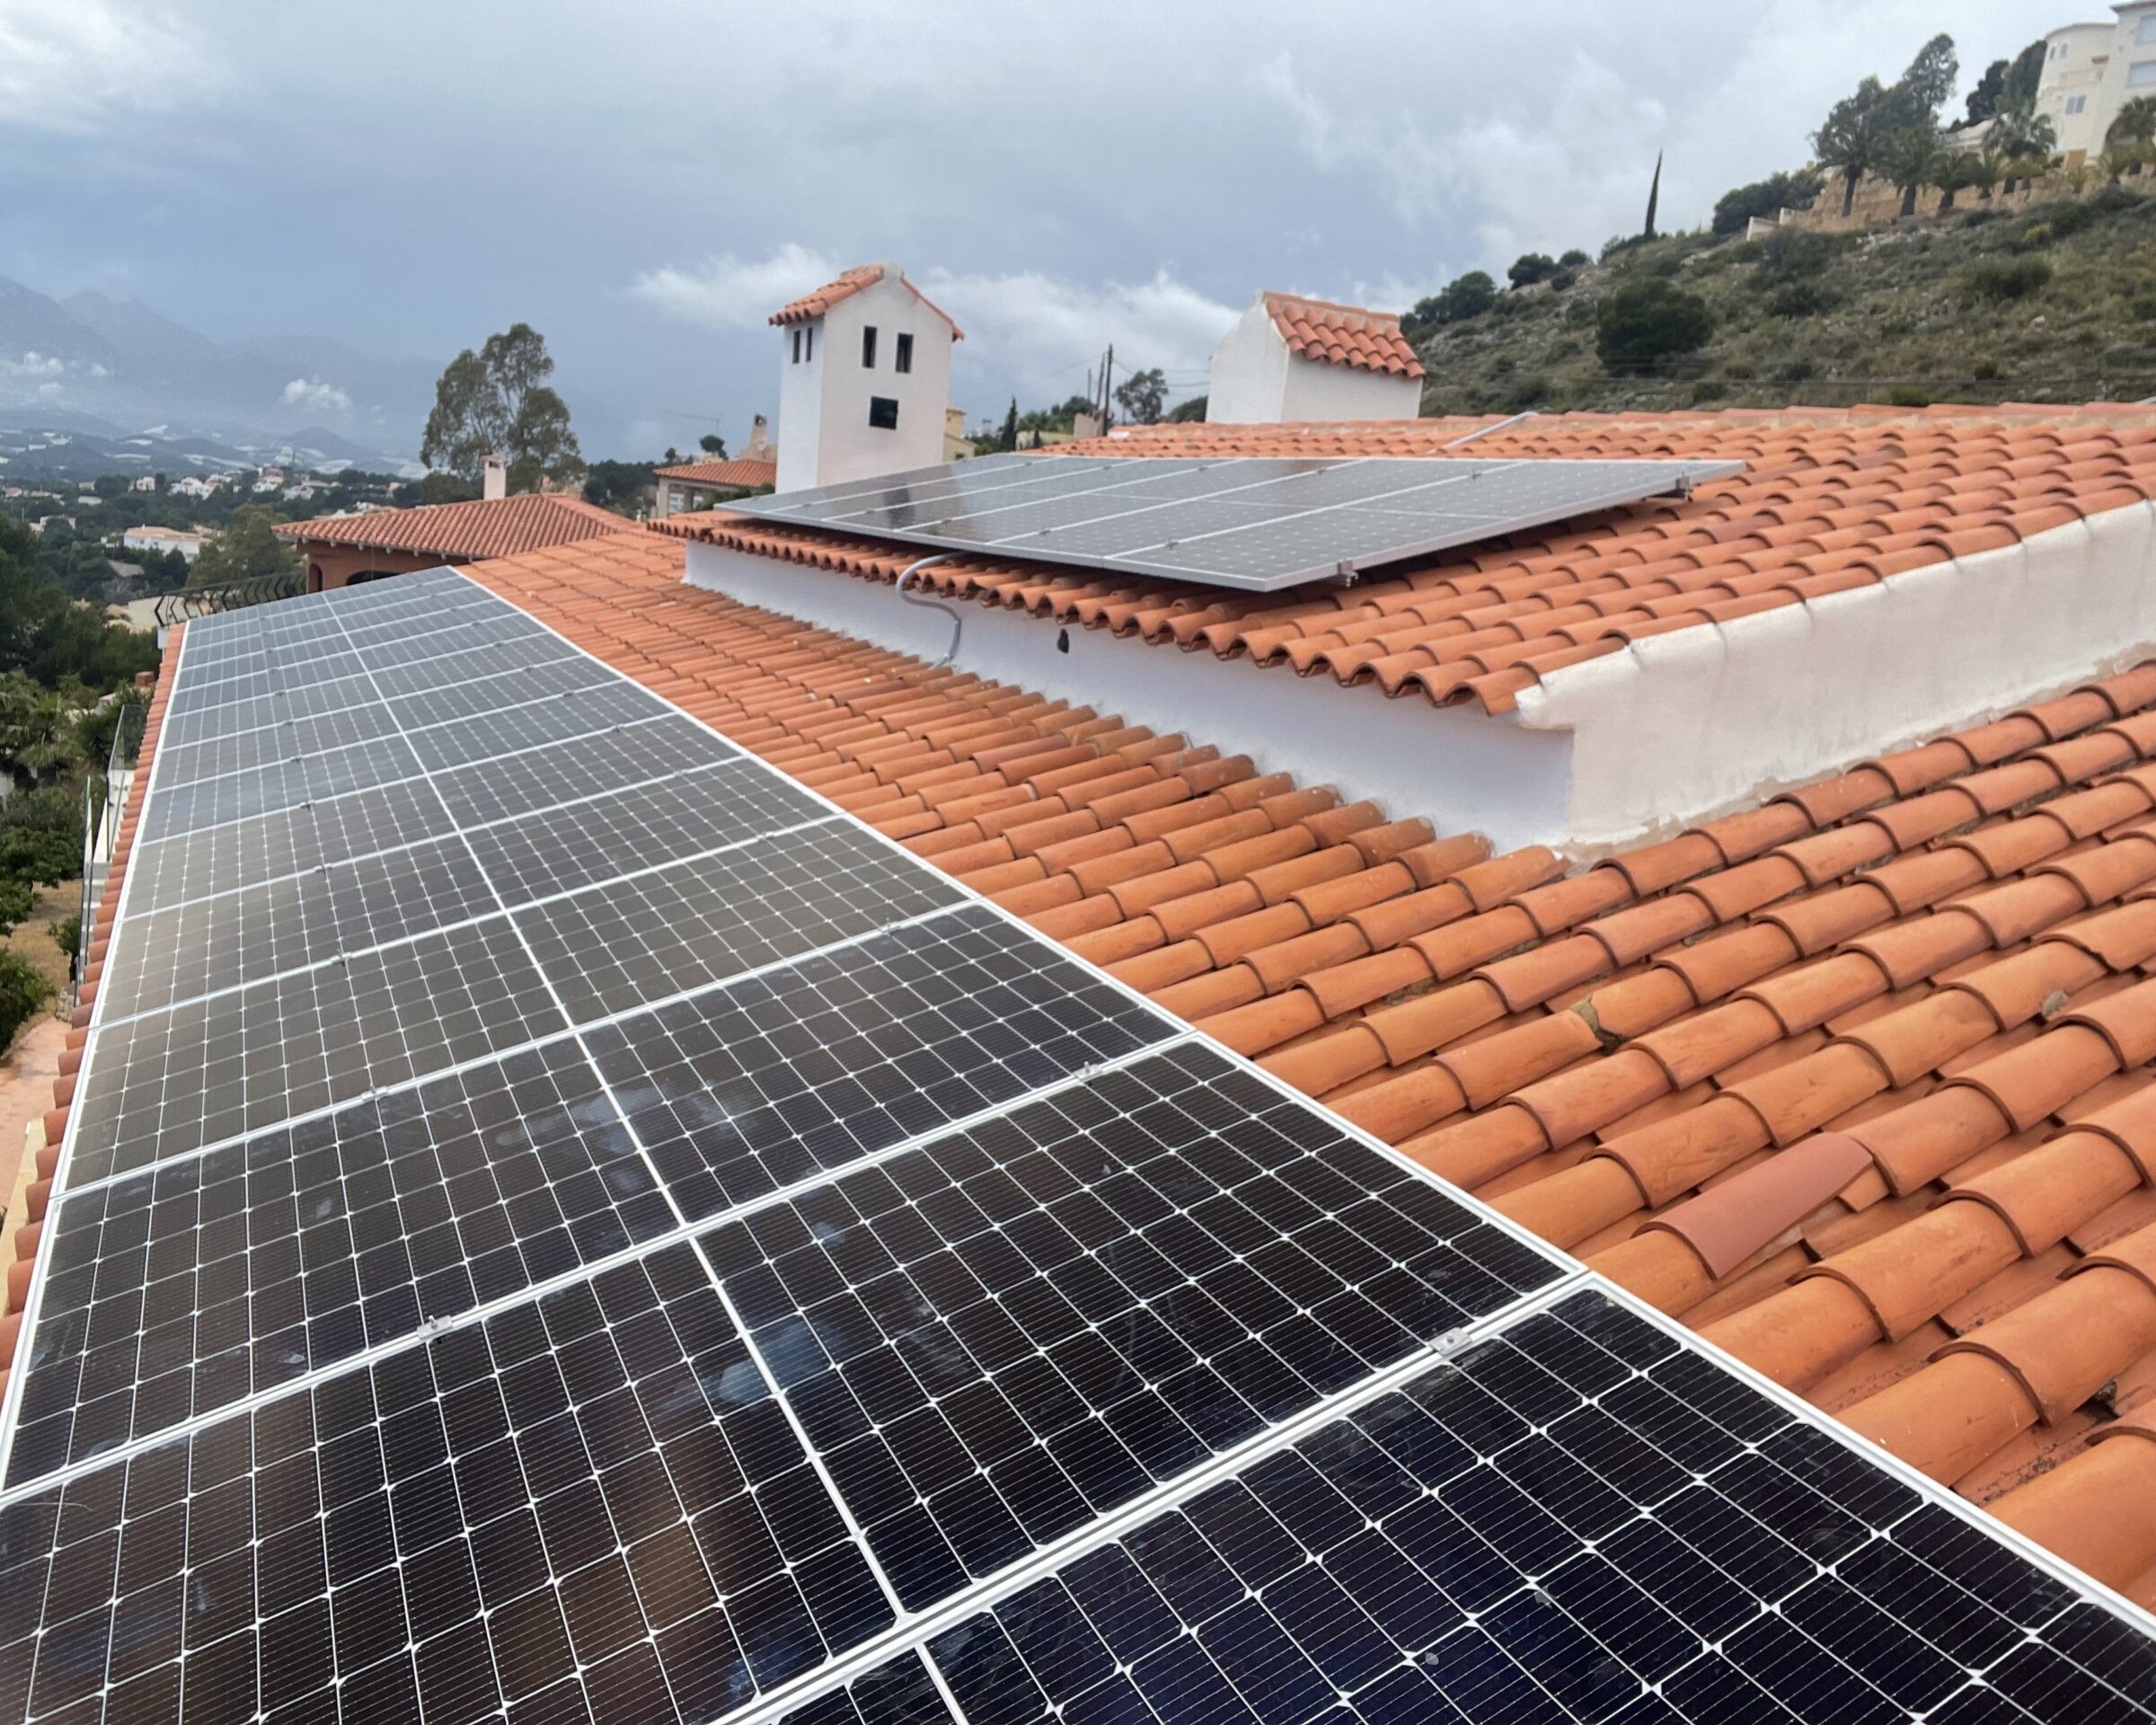 20x 460 wp Solar Panels, Altea, Alicante (Hybrid system)